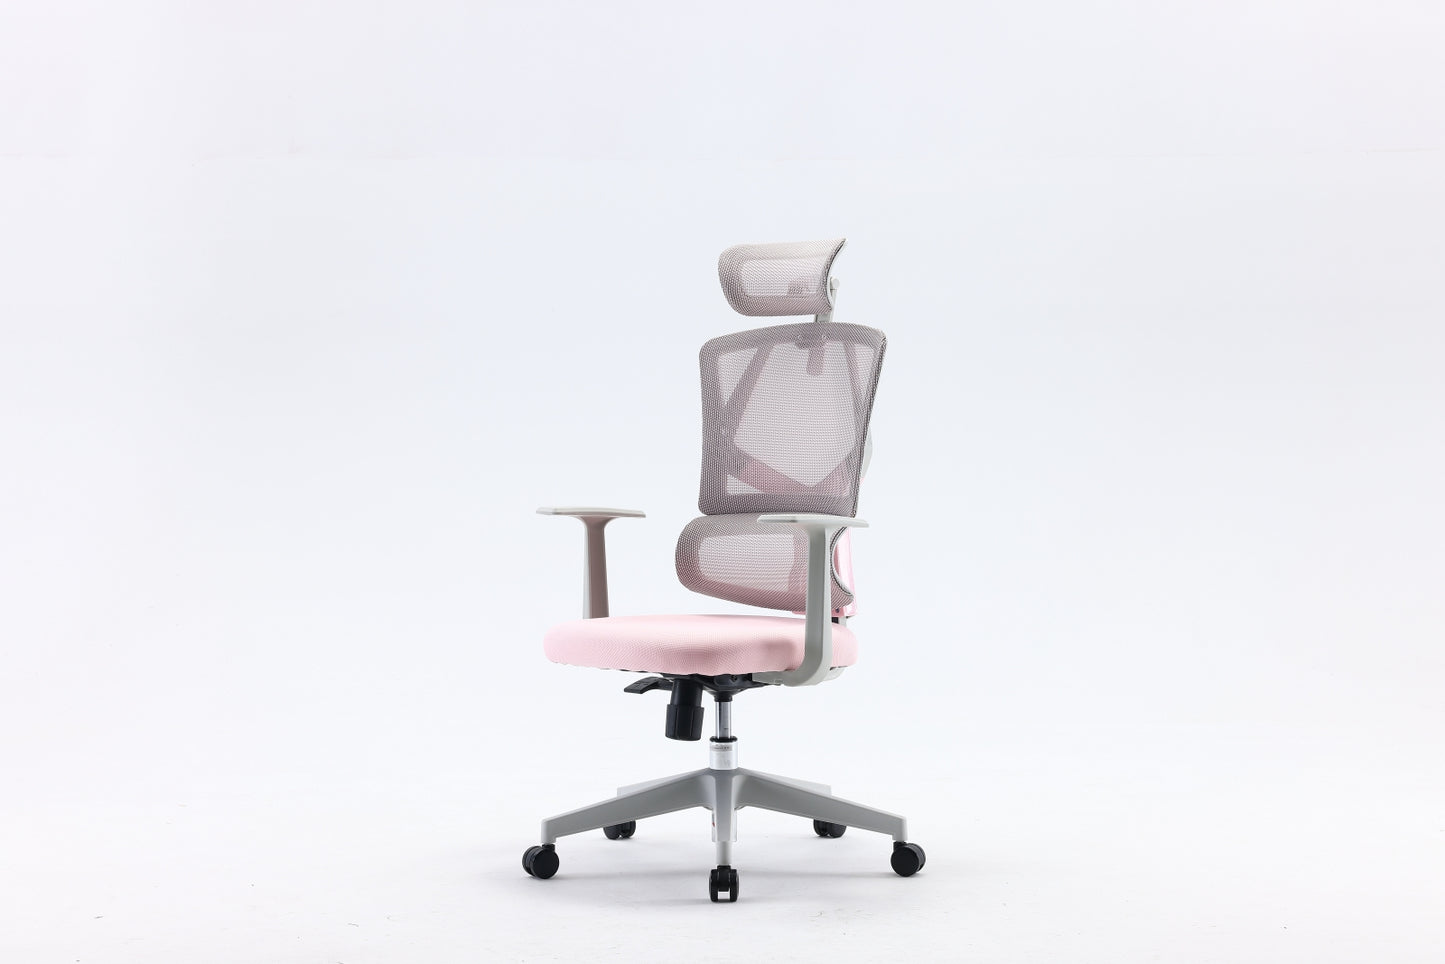 Sihoo M91D Ergonomic Chair